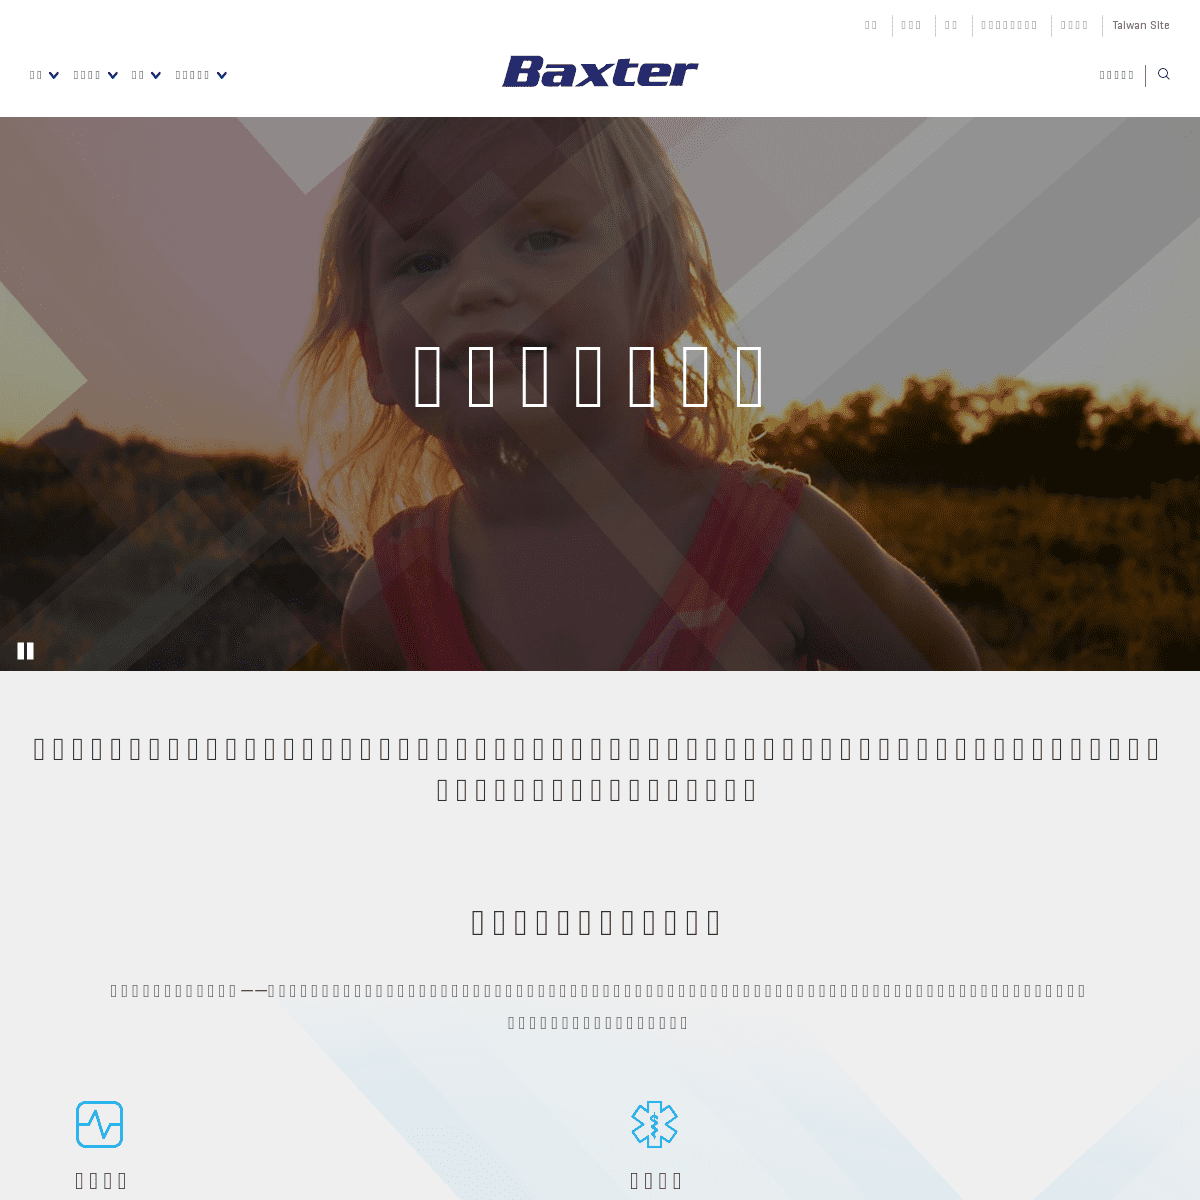 A complete backup of baxter.com.tw